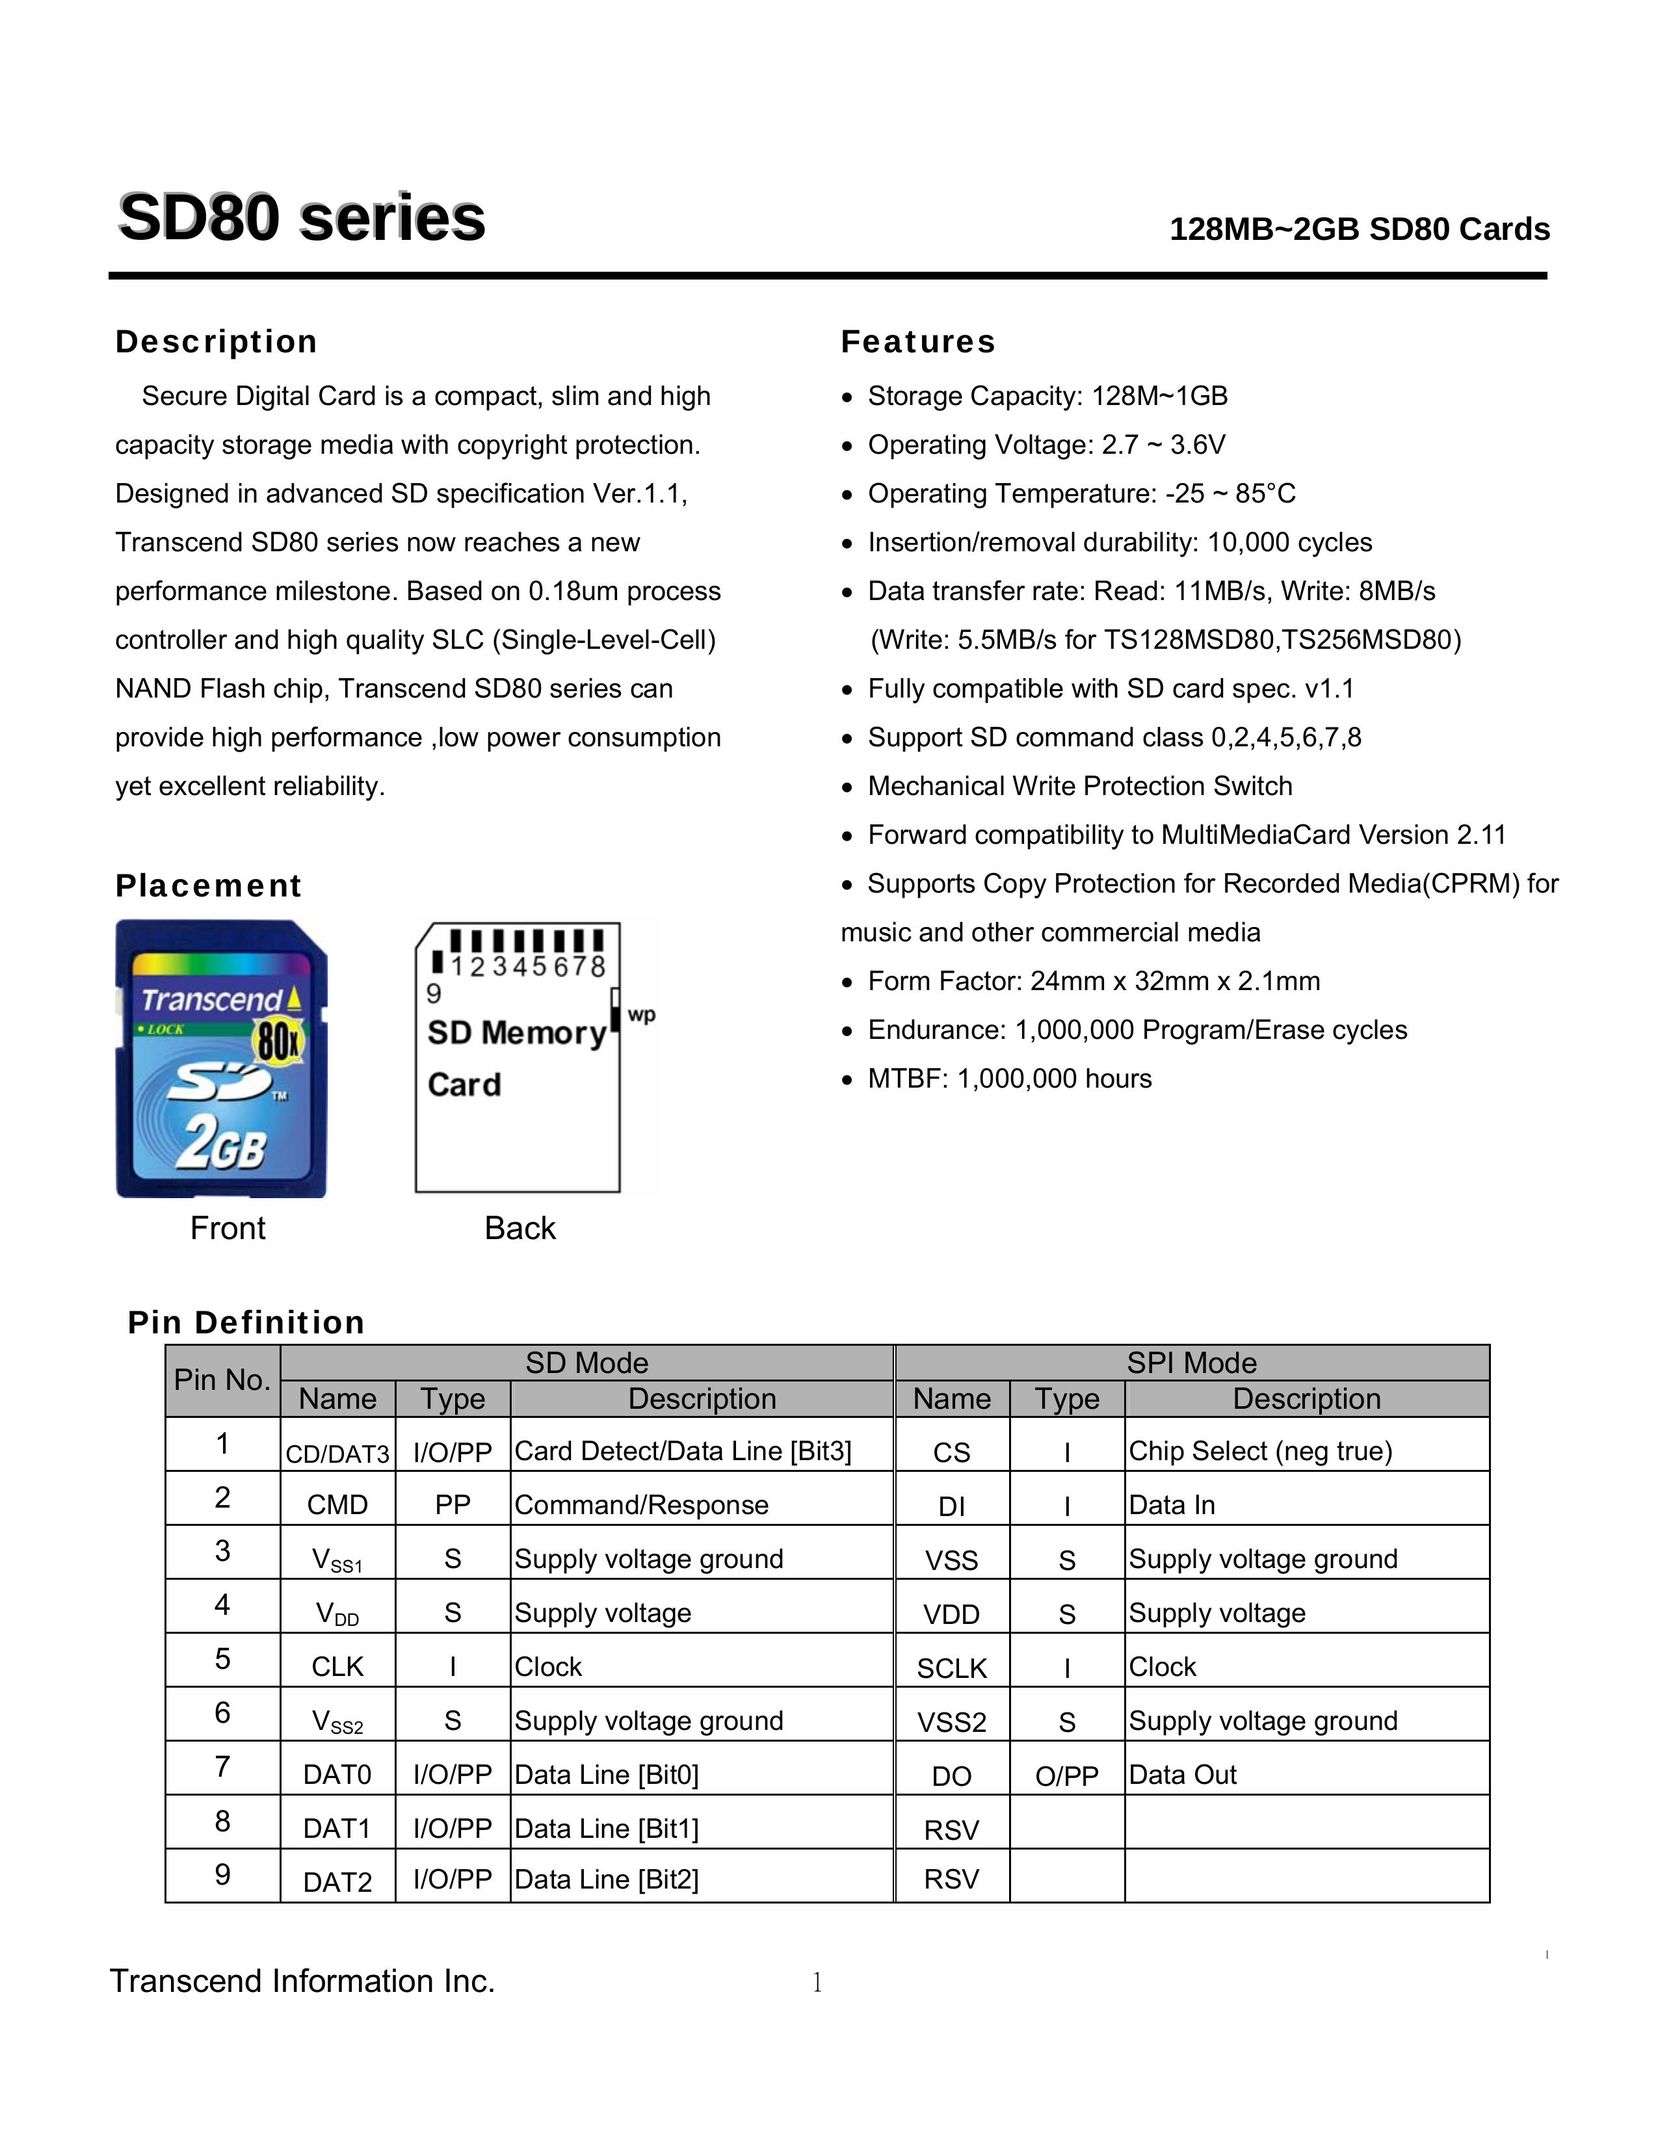 Transcend Information SD80 Network Card User Manual